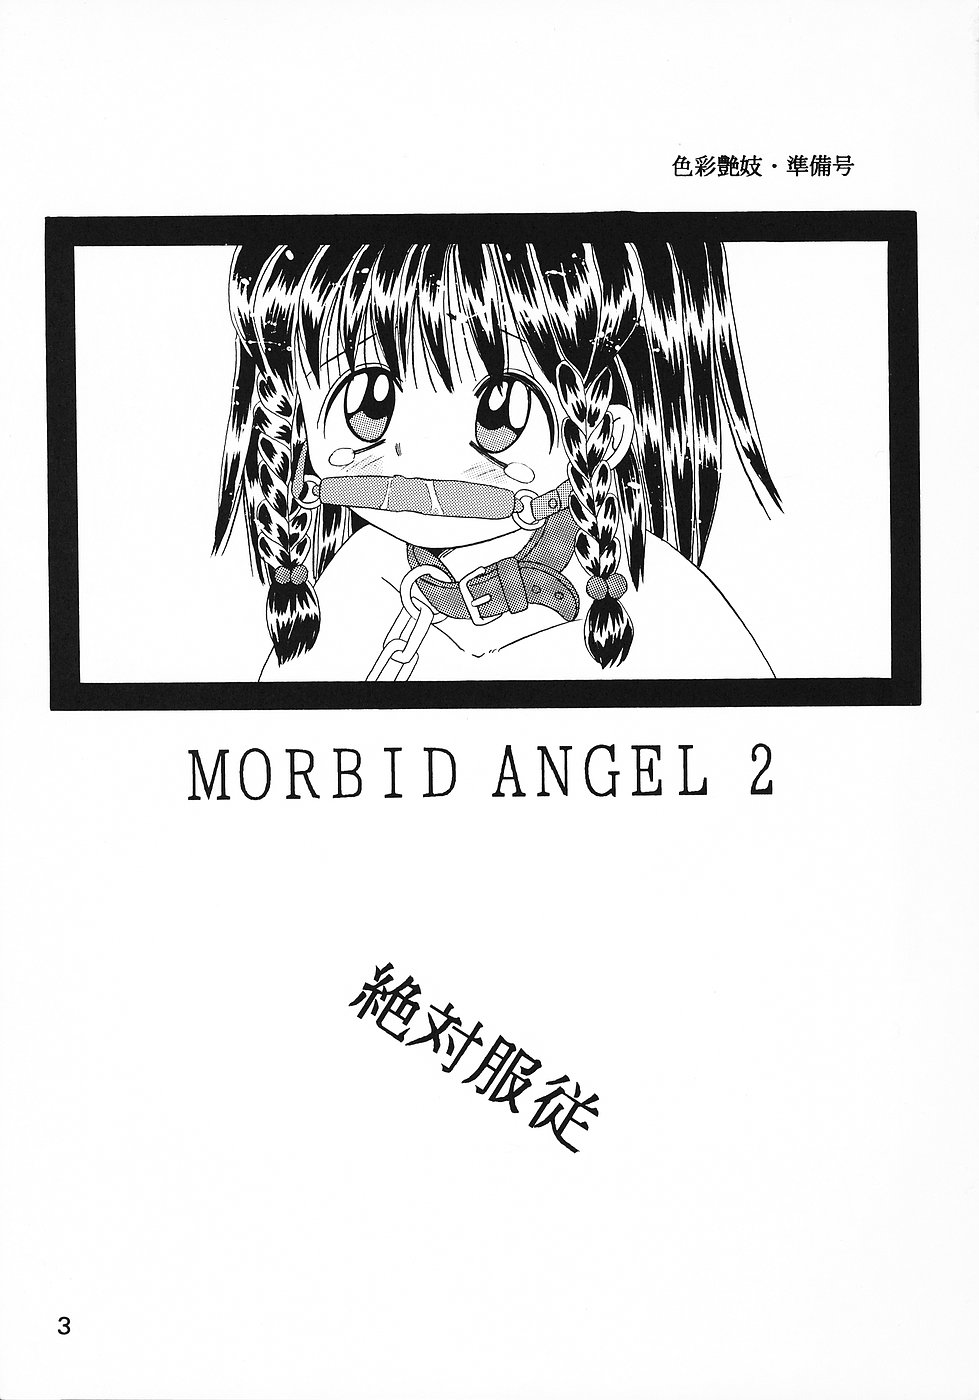 (同人誌) [奇想D工房] 色彩艶妓 準備号 MORBID ANGEL2 